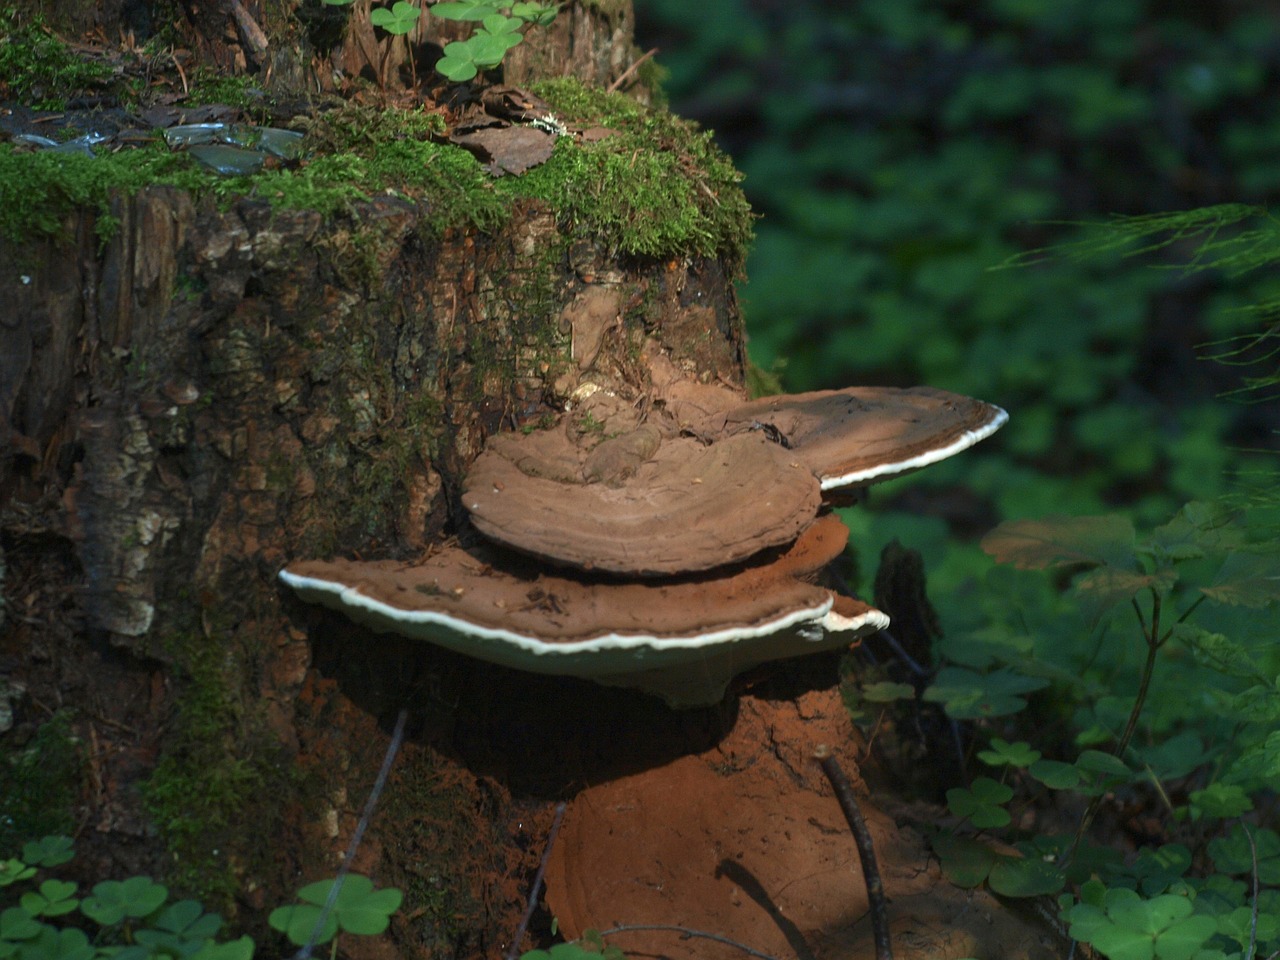 tinder fungus stump forest free photo